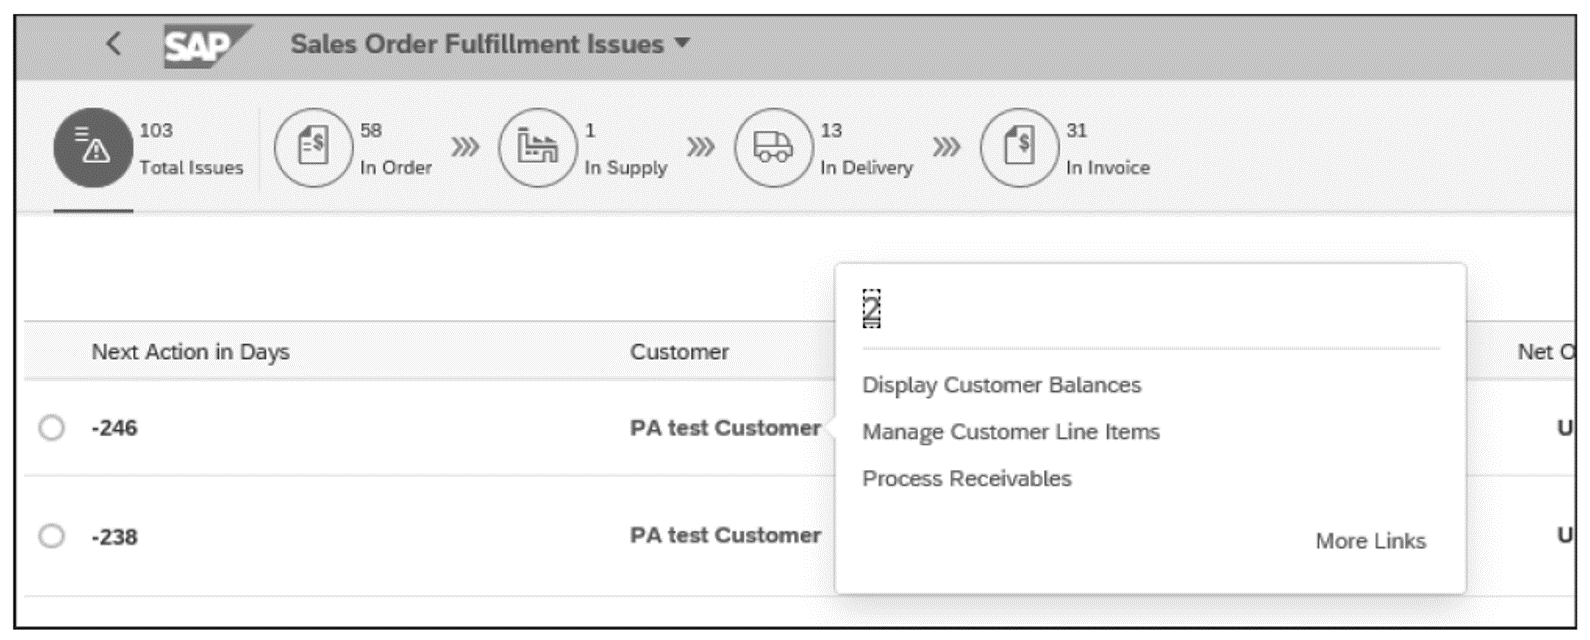 Sales Order Fulfillment Issues App: Drilldowns